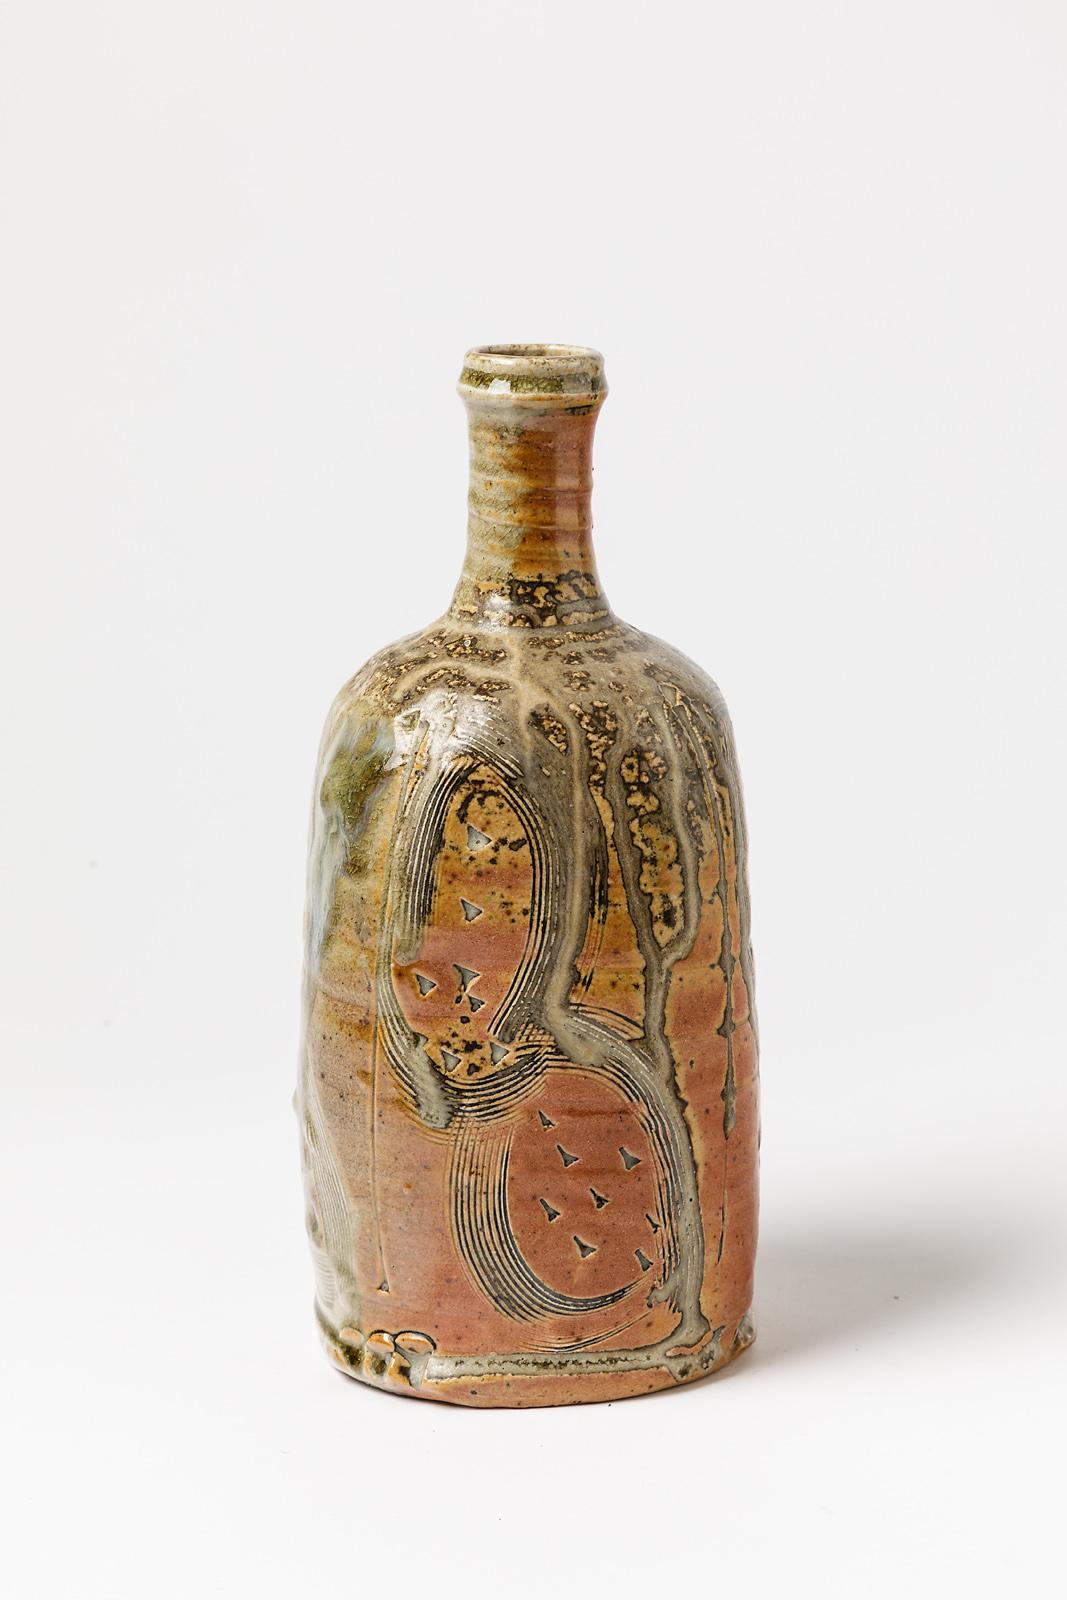 French Stoneware Colored Ceramic Bottle or Vase by D Garet La Borne circa 1990 For Sale